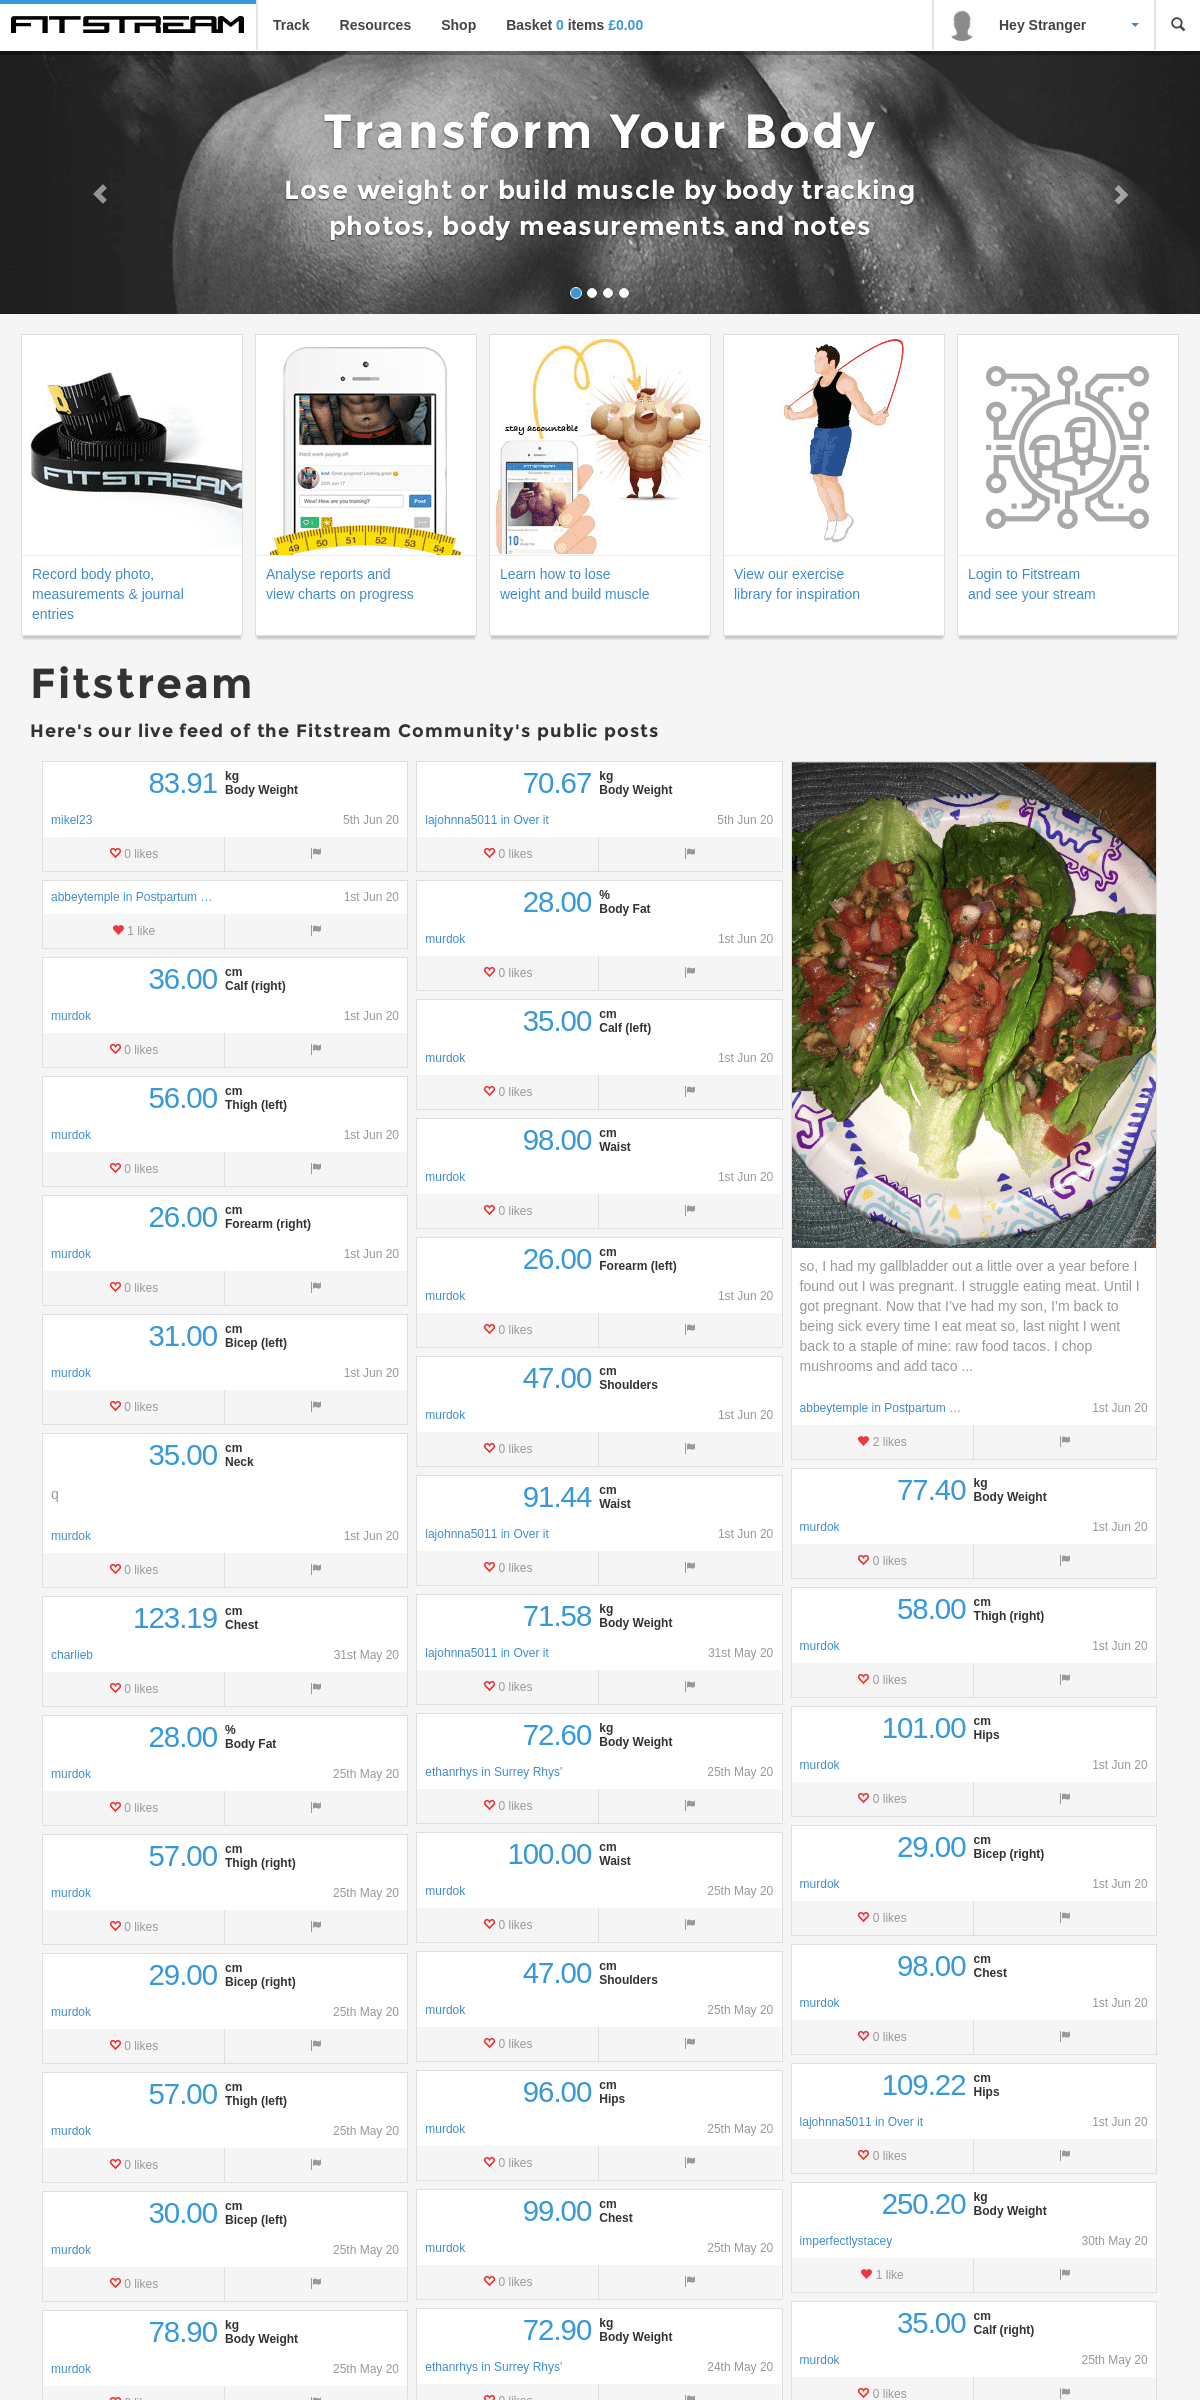 A complete backup of fitstream.com